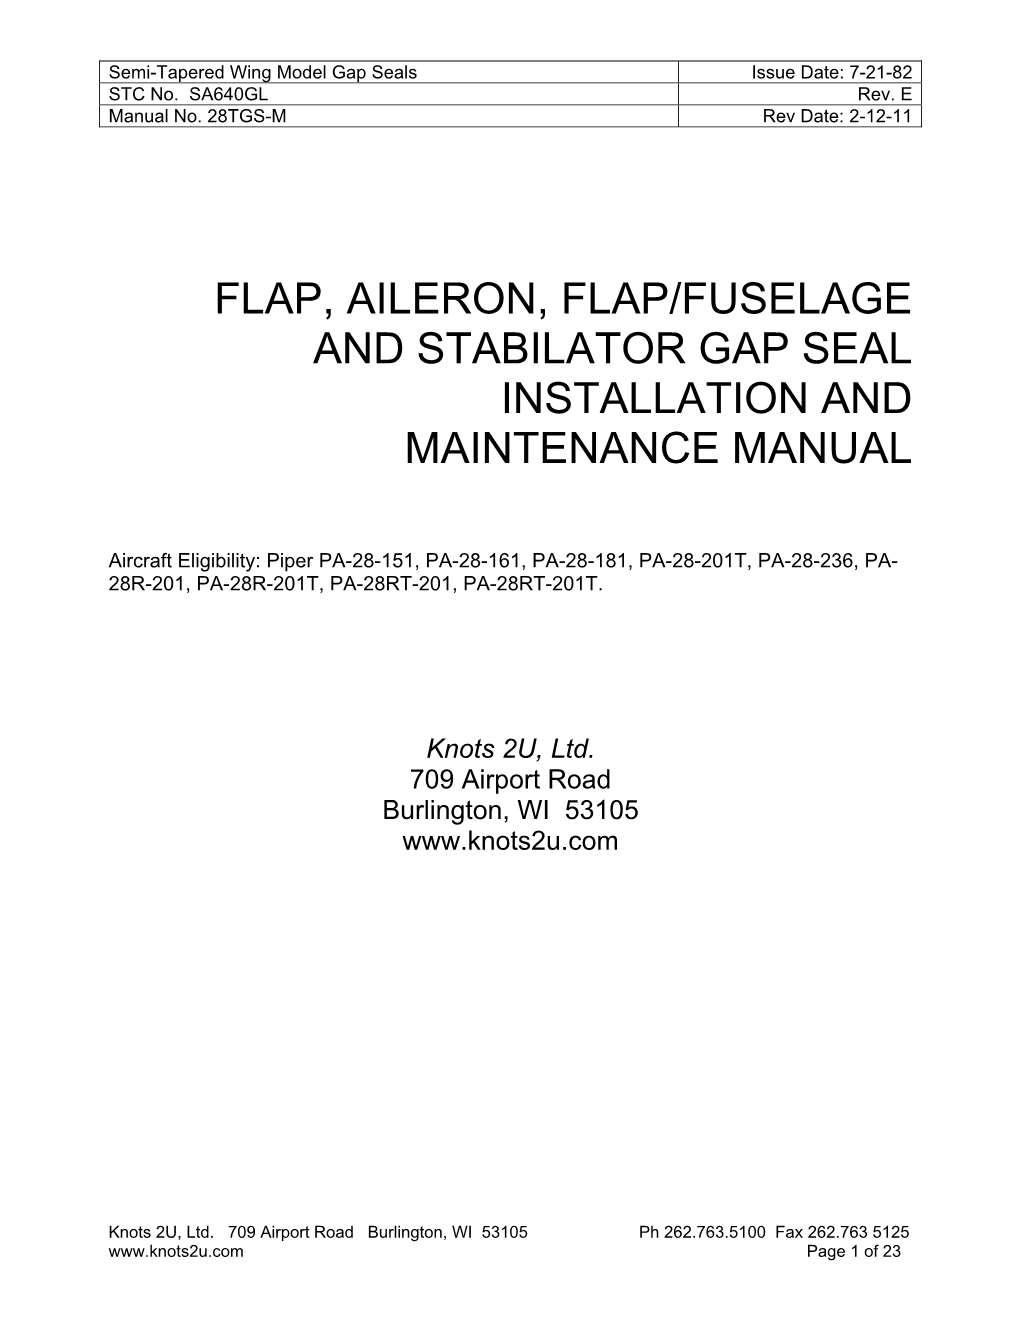 Flap, Aileron, Flap/Fuselage and Stabilator Gap Seal Installation and Maintenance Manual